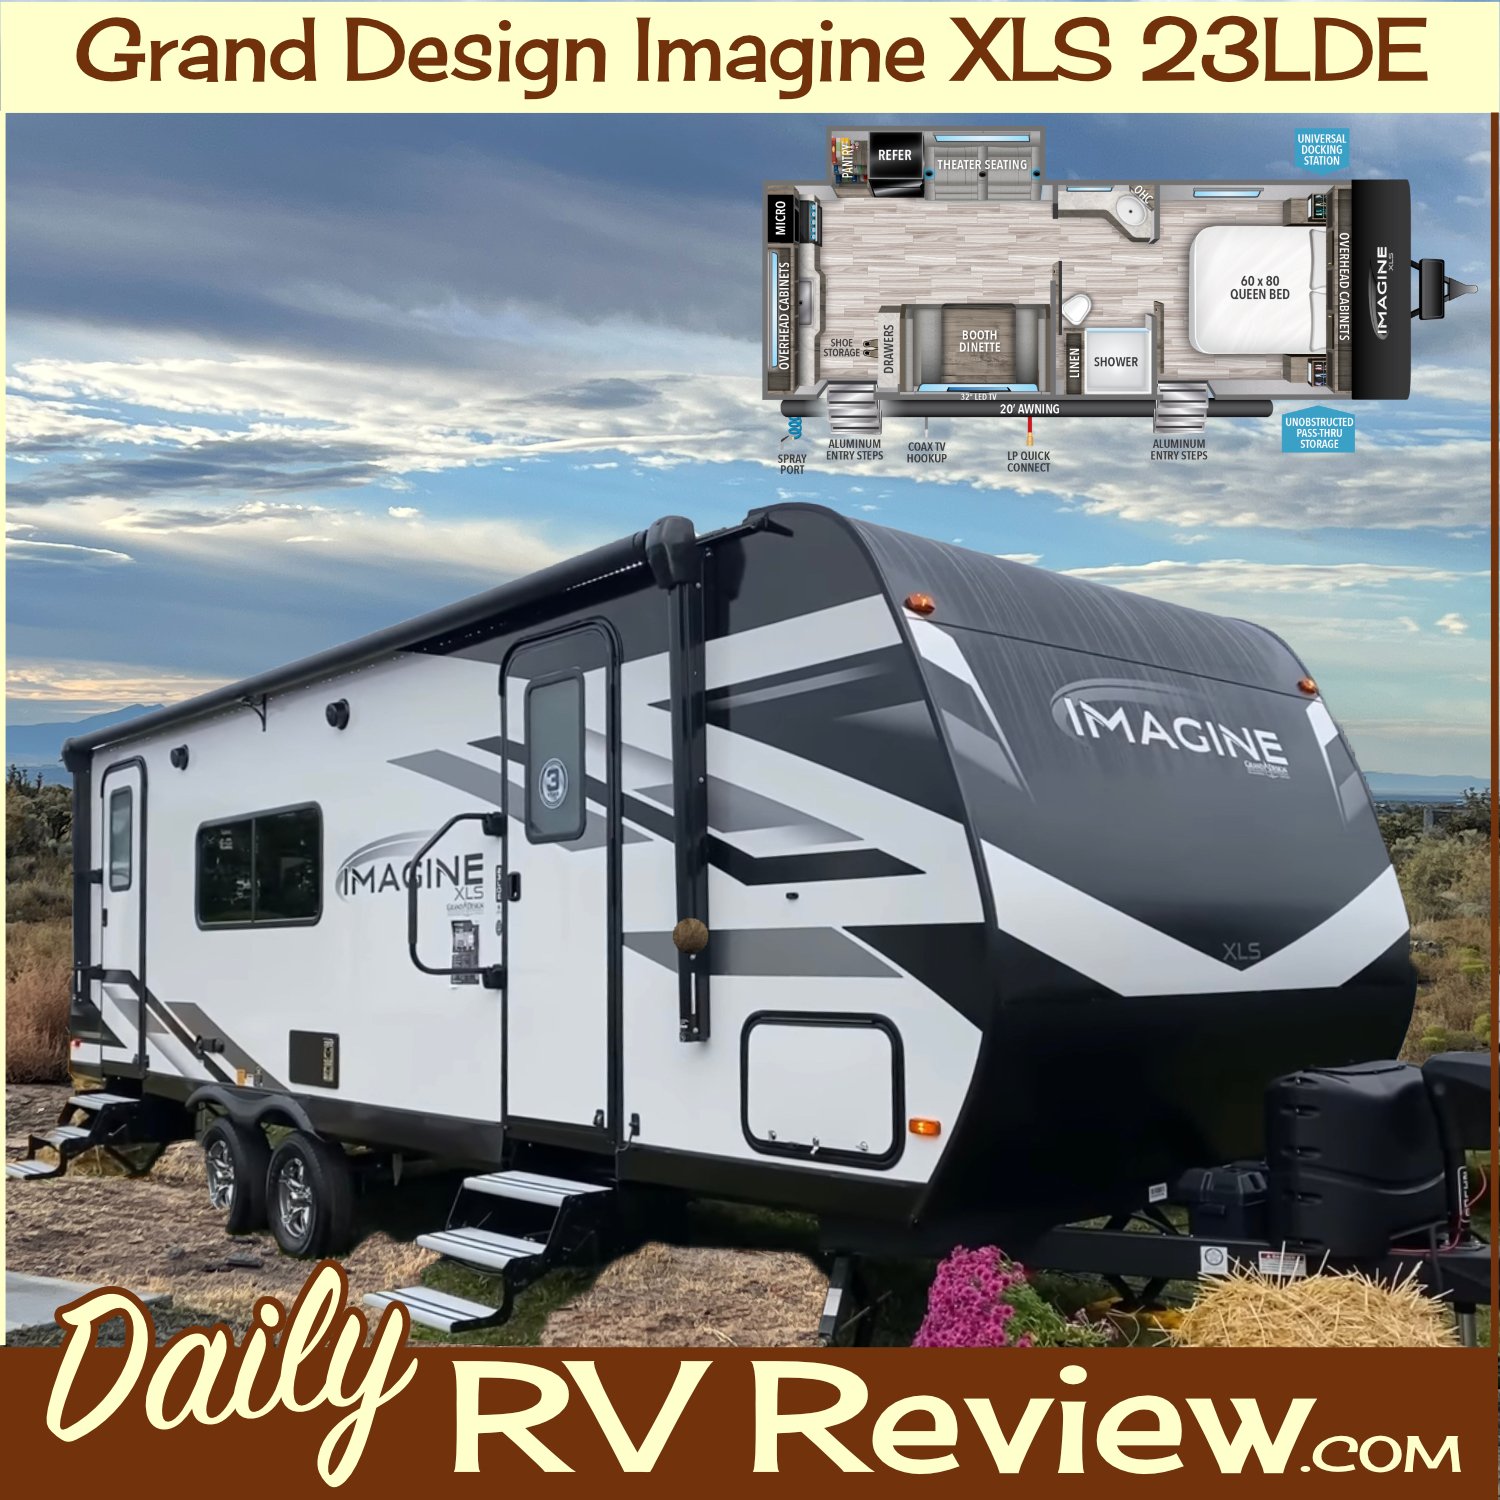 Daily RV review: Grand Design Imagine XLS 23LDE travel trailer